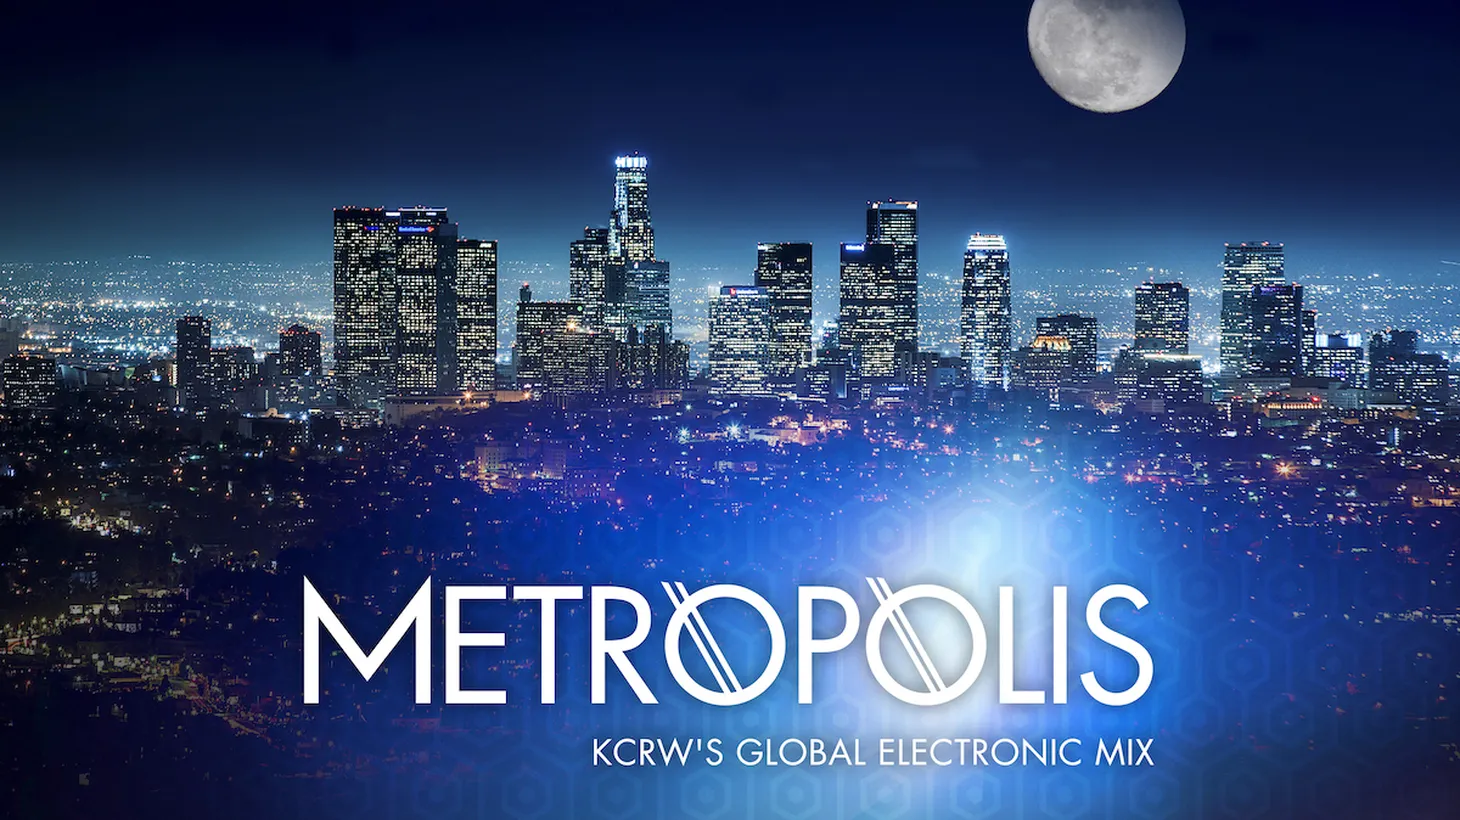 Metropolis playlist, August 27, 2022.